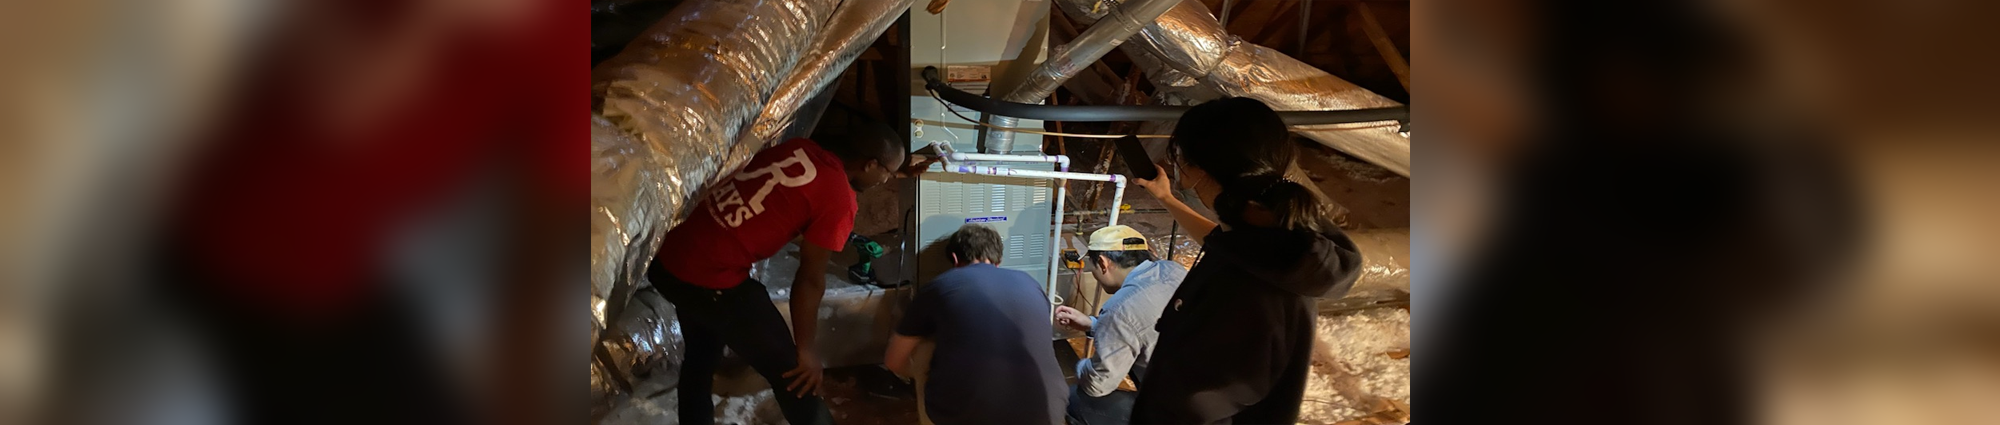 BEEL team installing smart sensors in a selected home